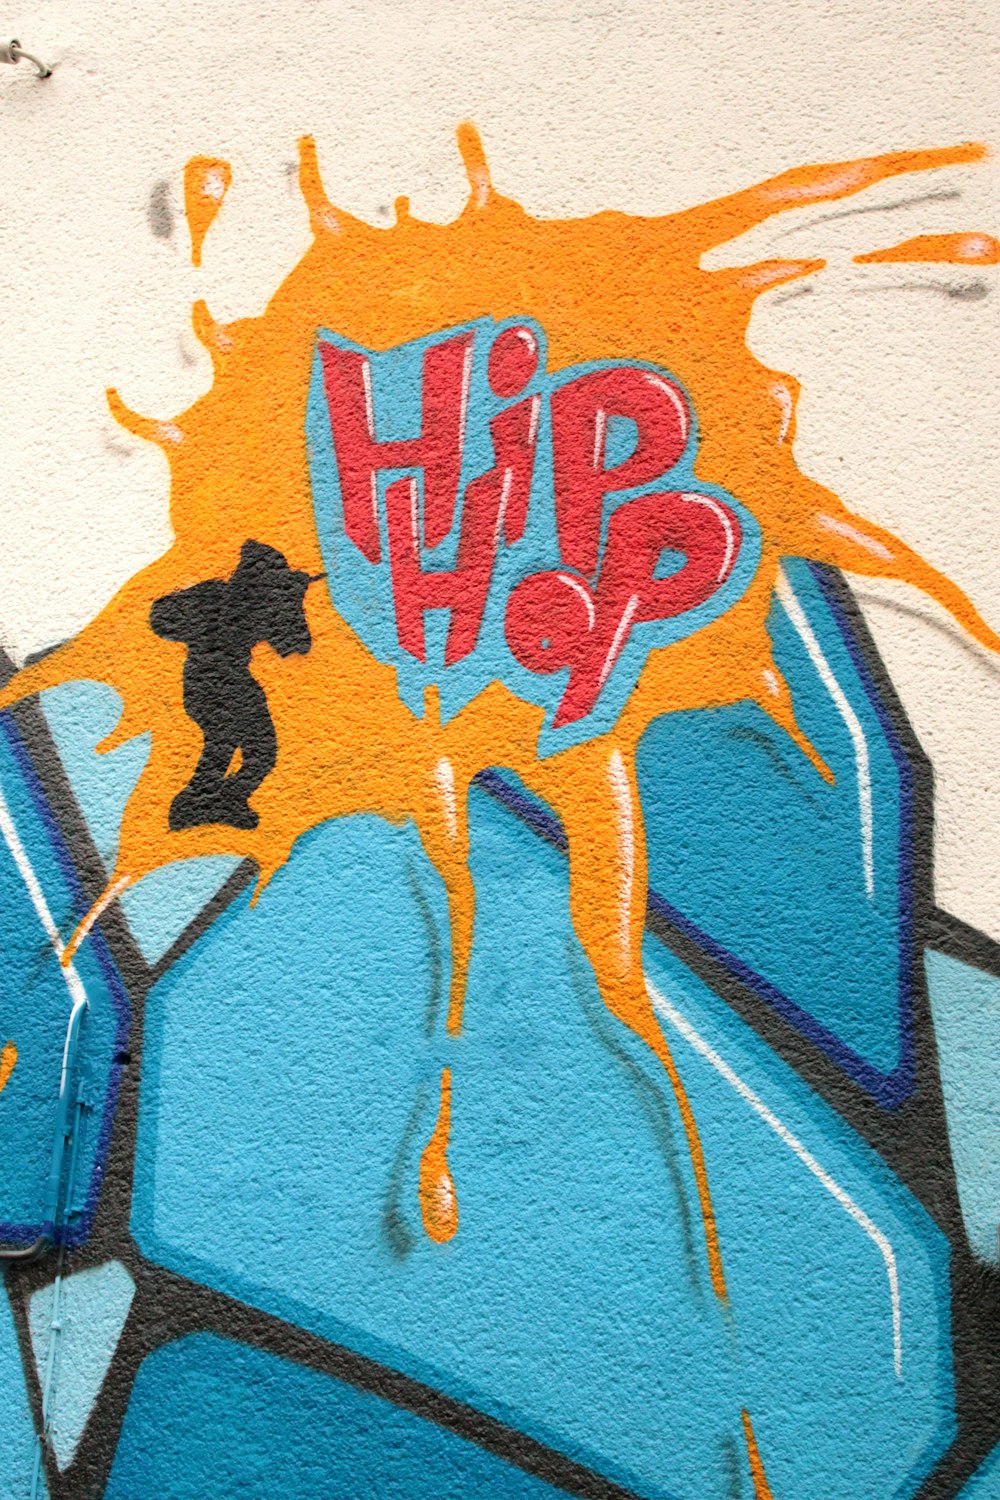 hip hop graffiti art wallpaper